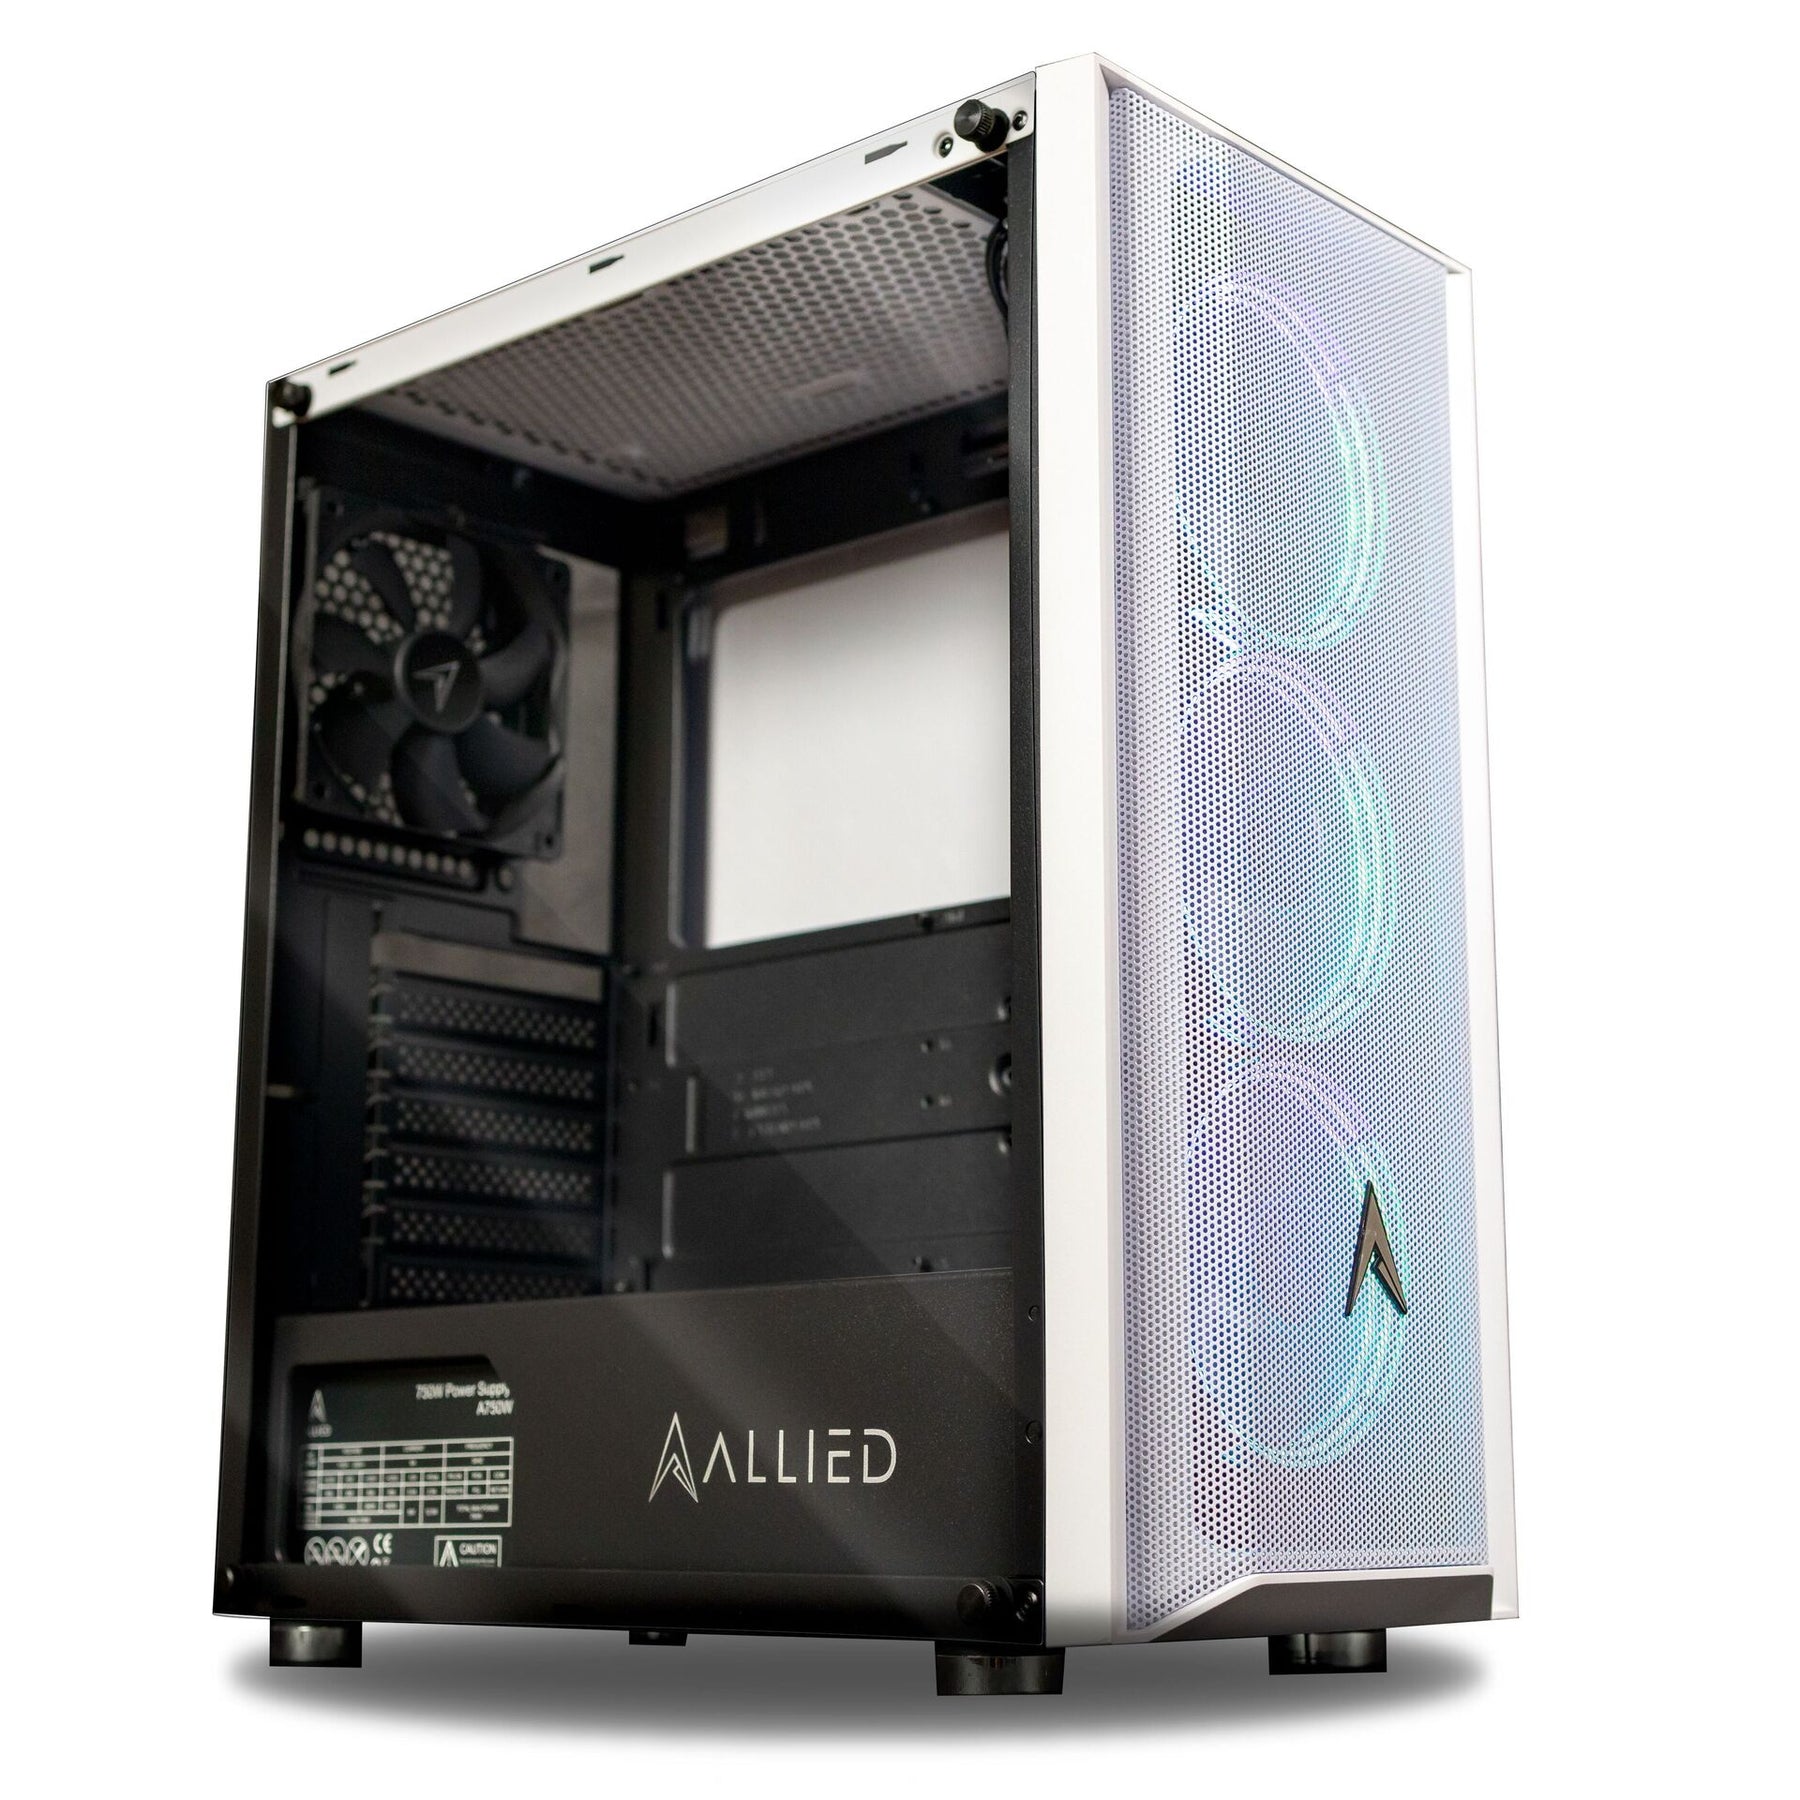 Allied Patriot ATX Tower Gaming Desktop Case